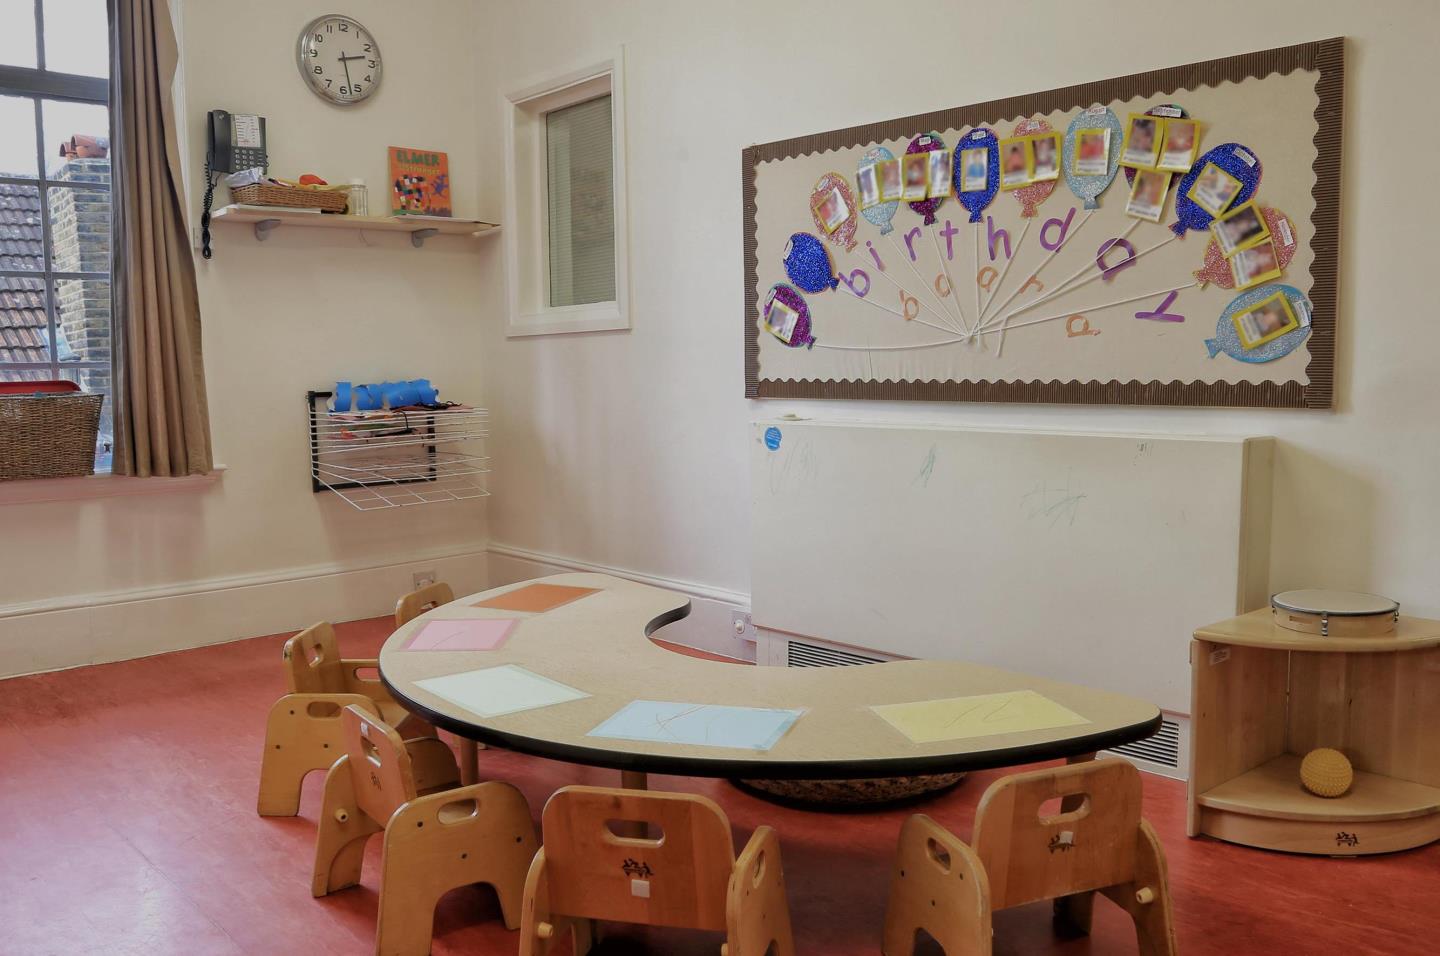 Bright Horizons Lewisham Day Nursery and Preschool Lewisham 03339 207050